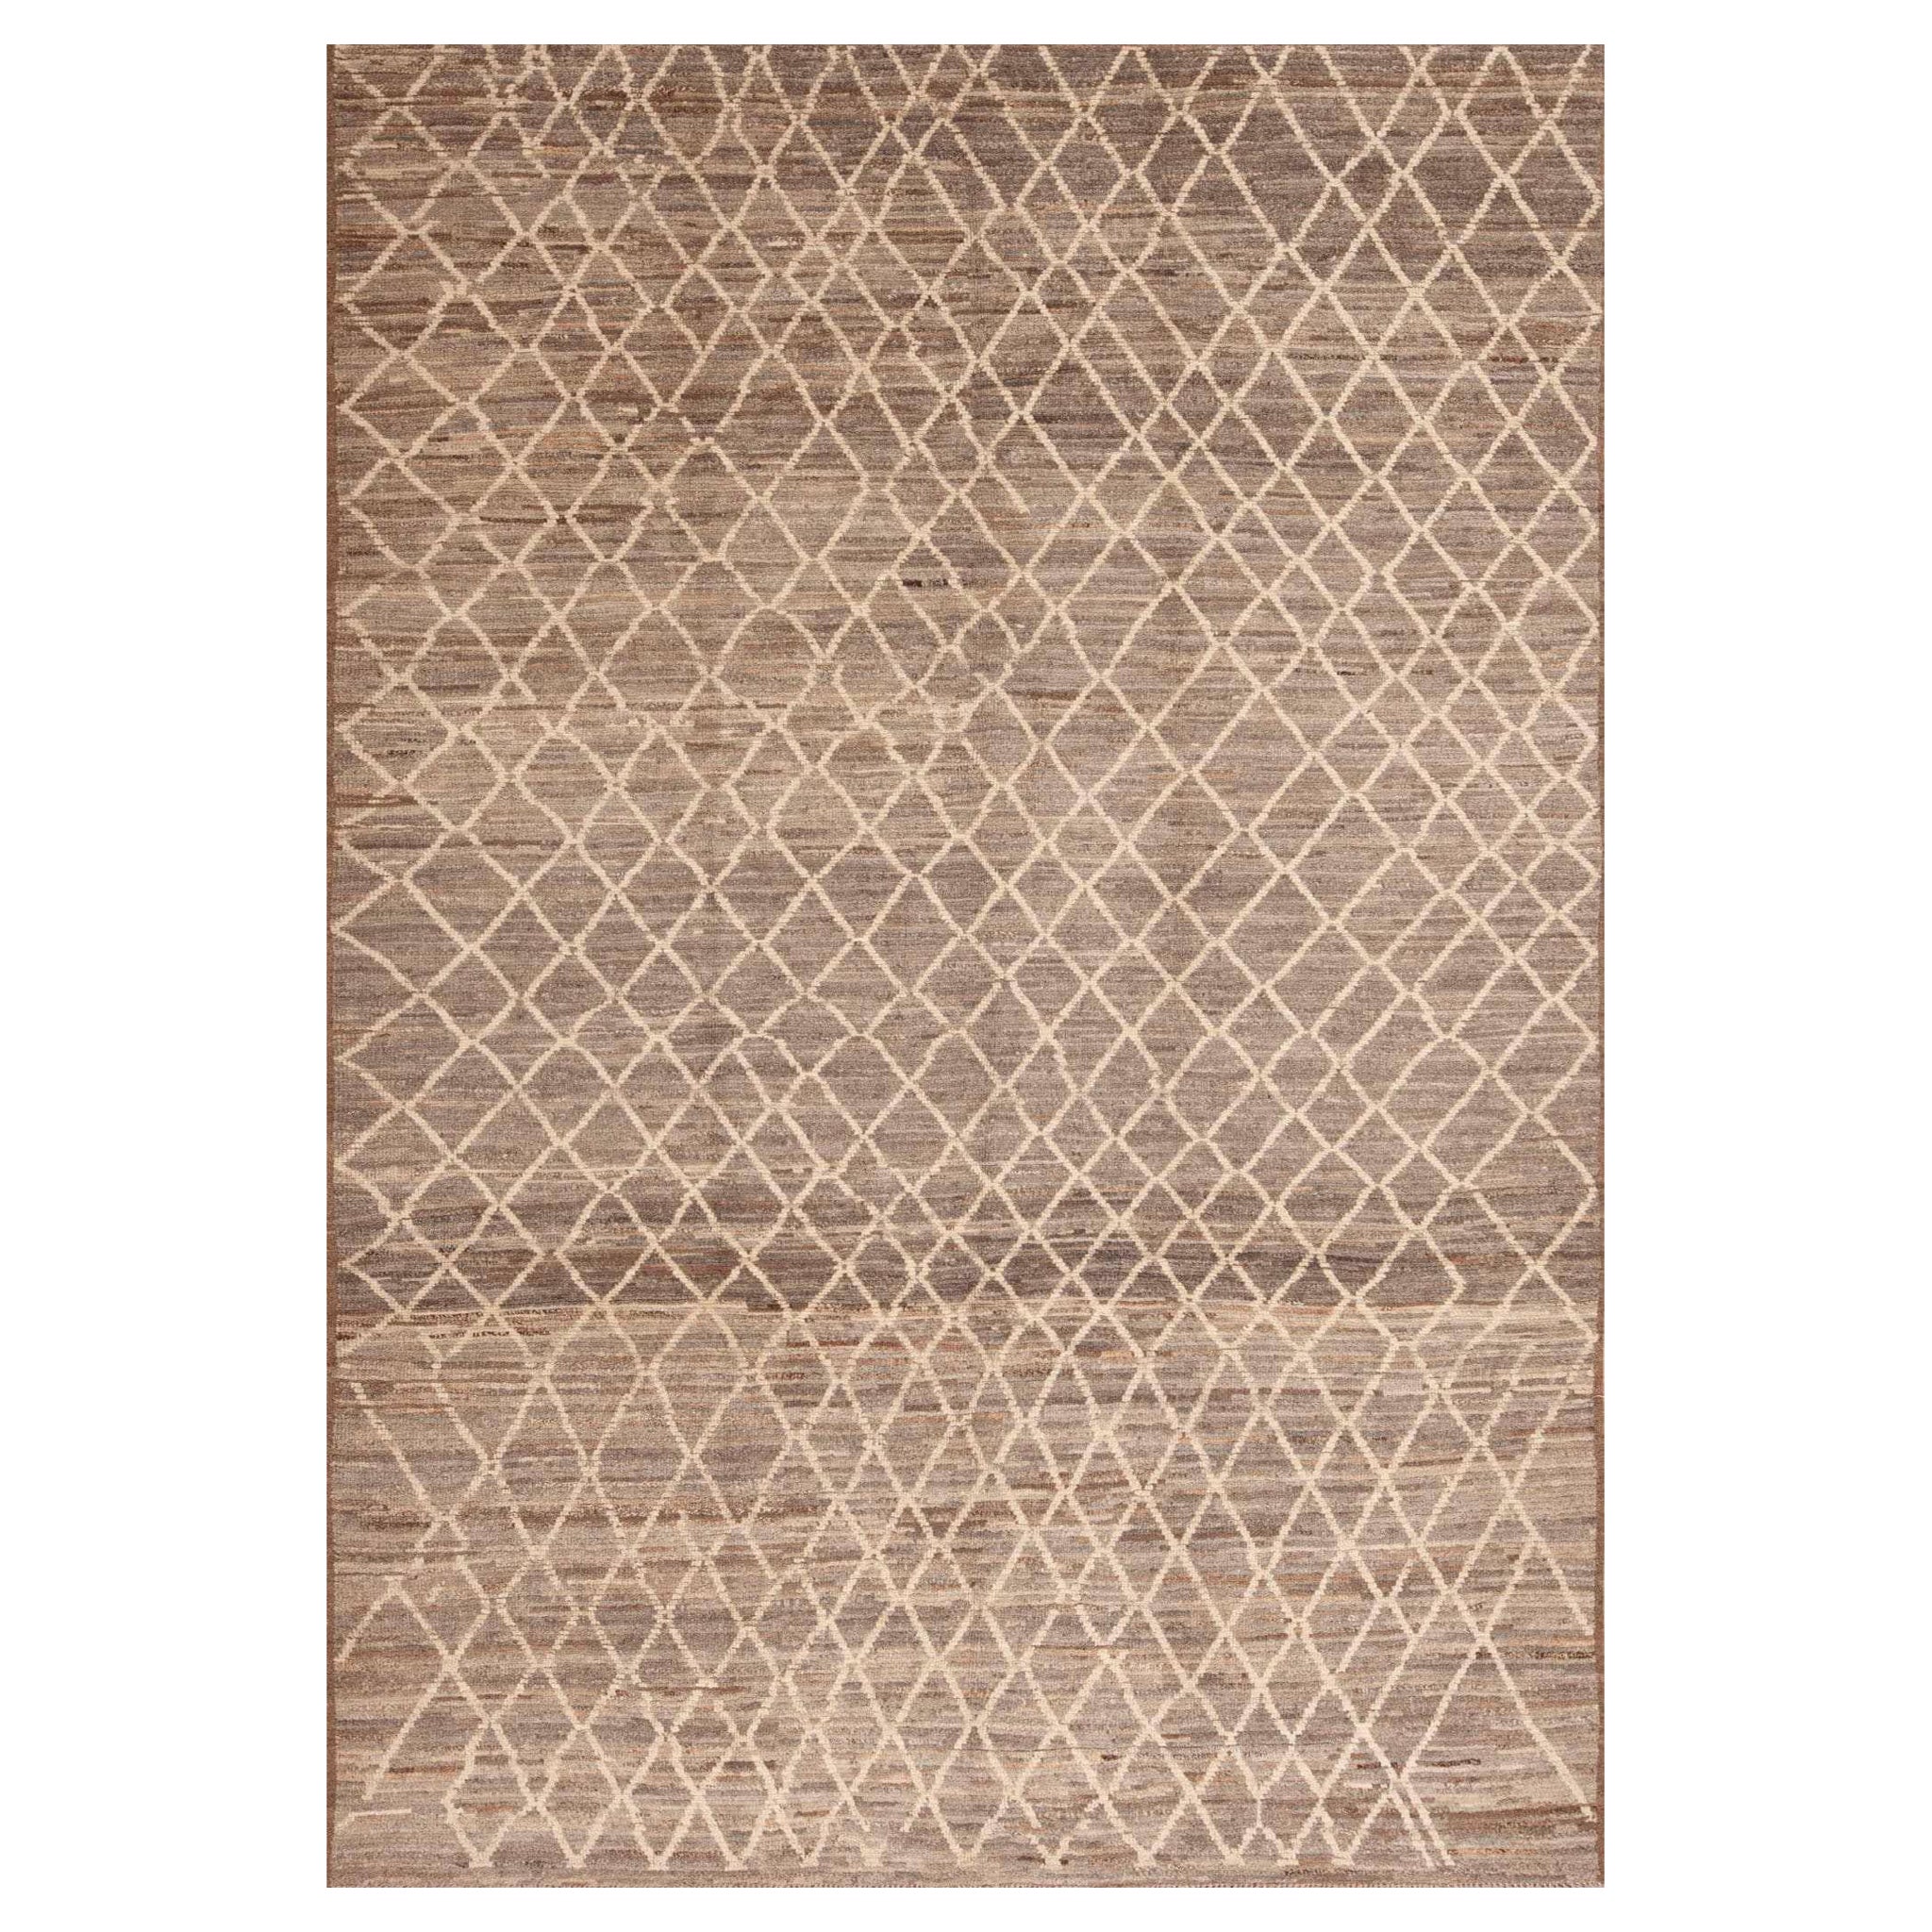 Nazmiyal Collection Modern Grey Abrash Ivory Tribal Geometric Rug 6'6" x 9'4" For Sale